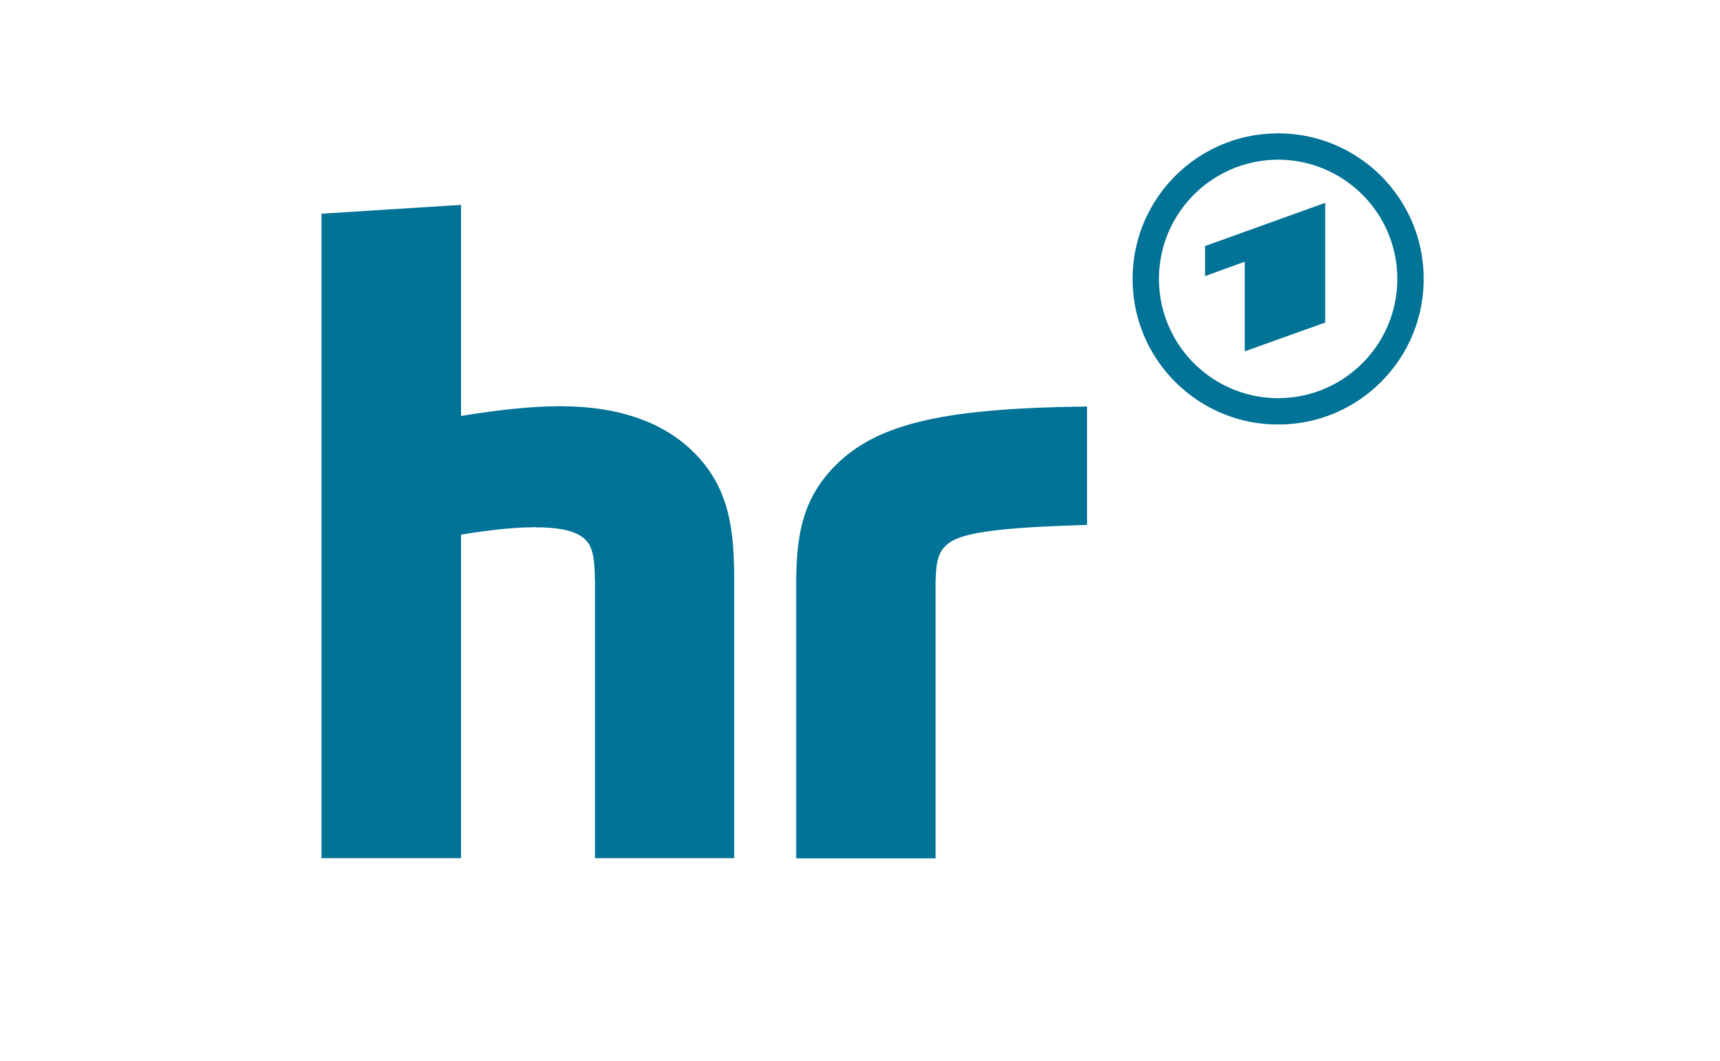 Logo hr